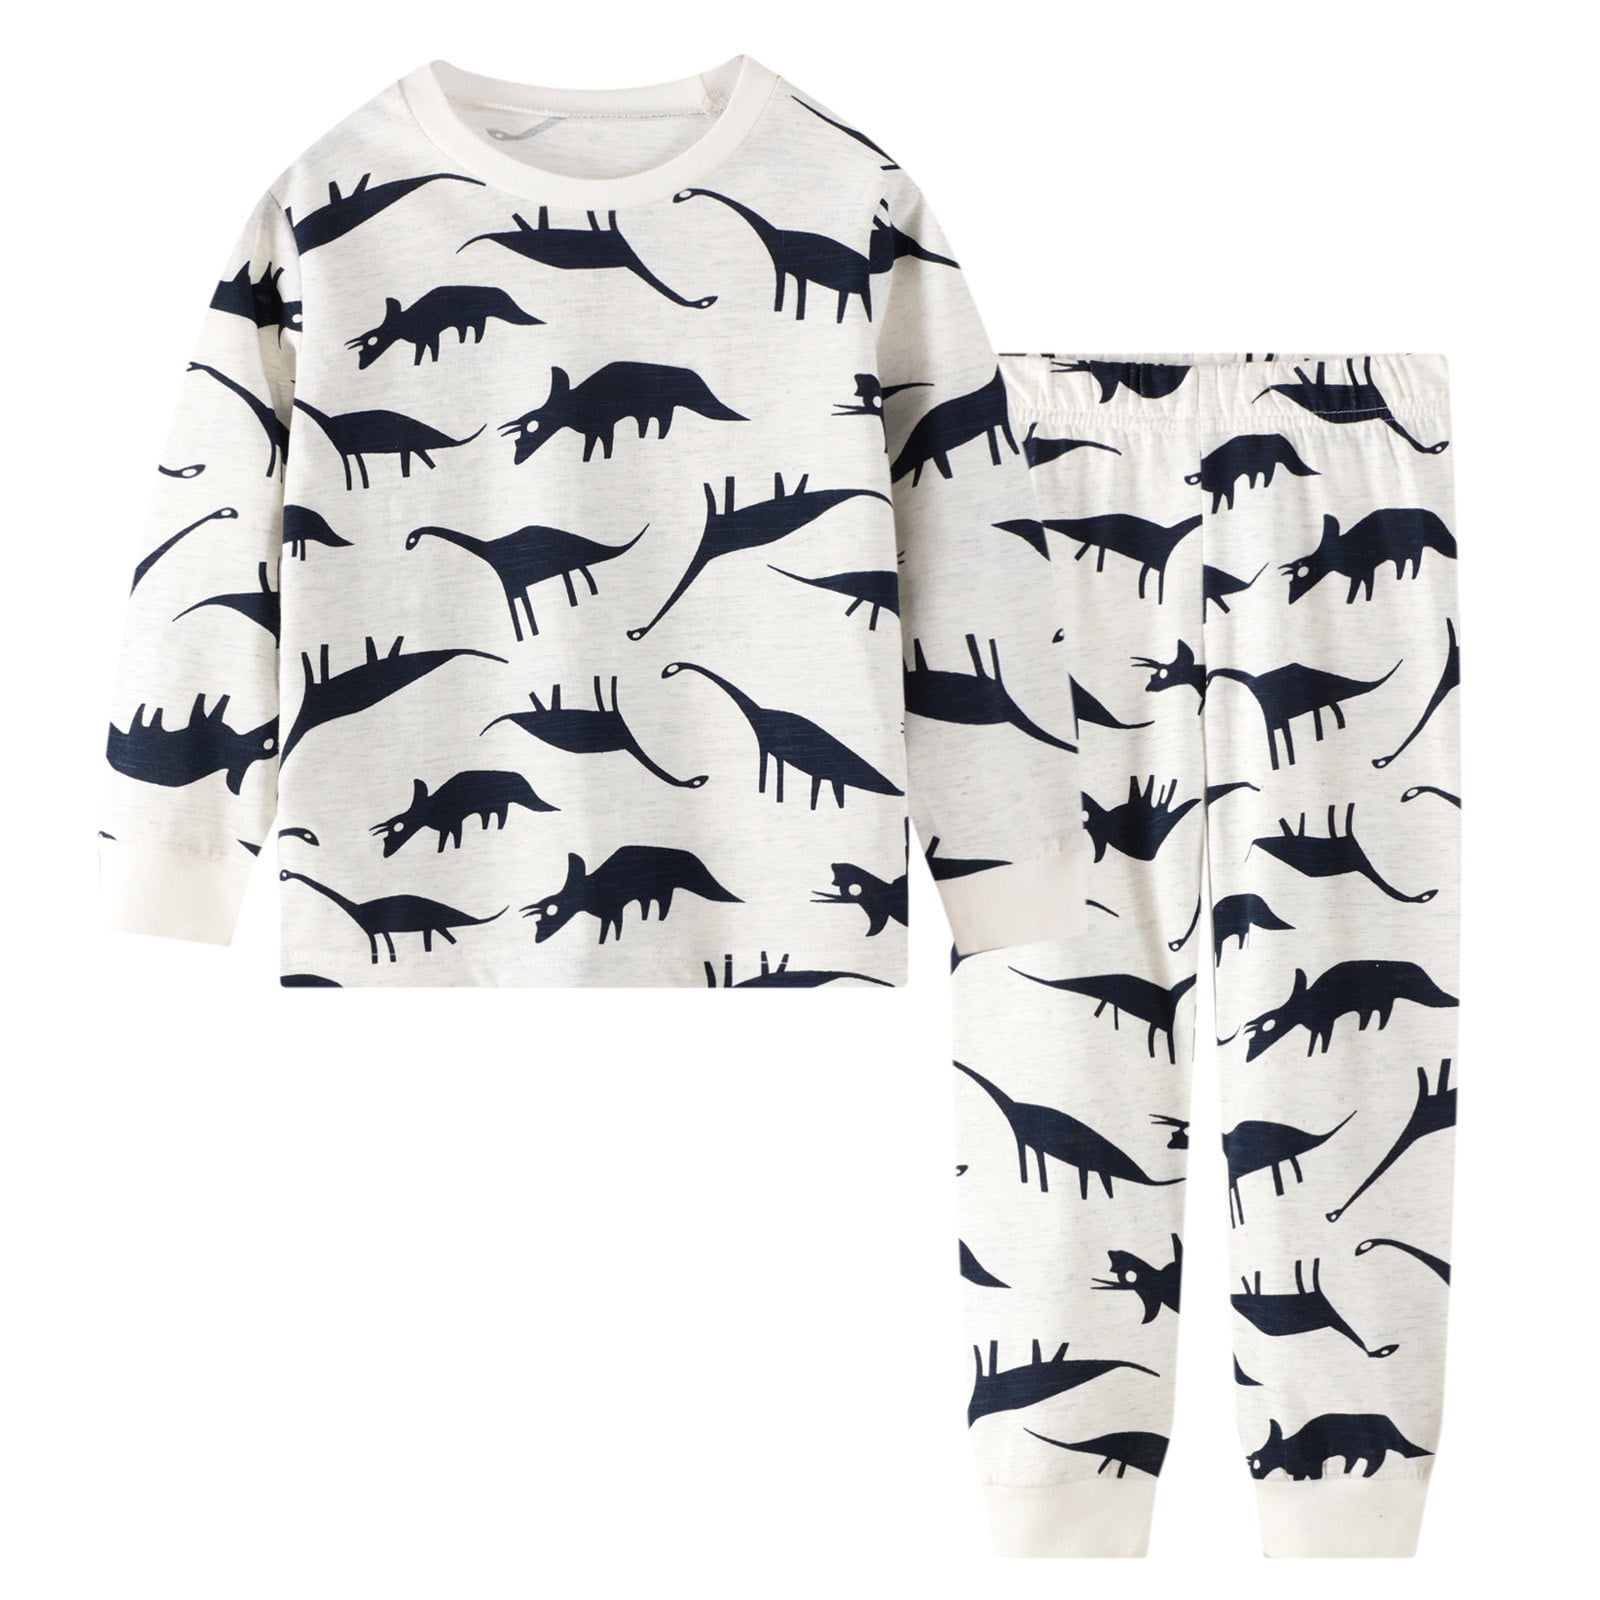 Baby clothes kids boys 100% cotton outfits&set Pajamas T shirt+pants sleepwear 